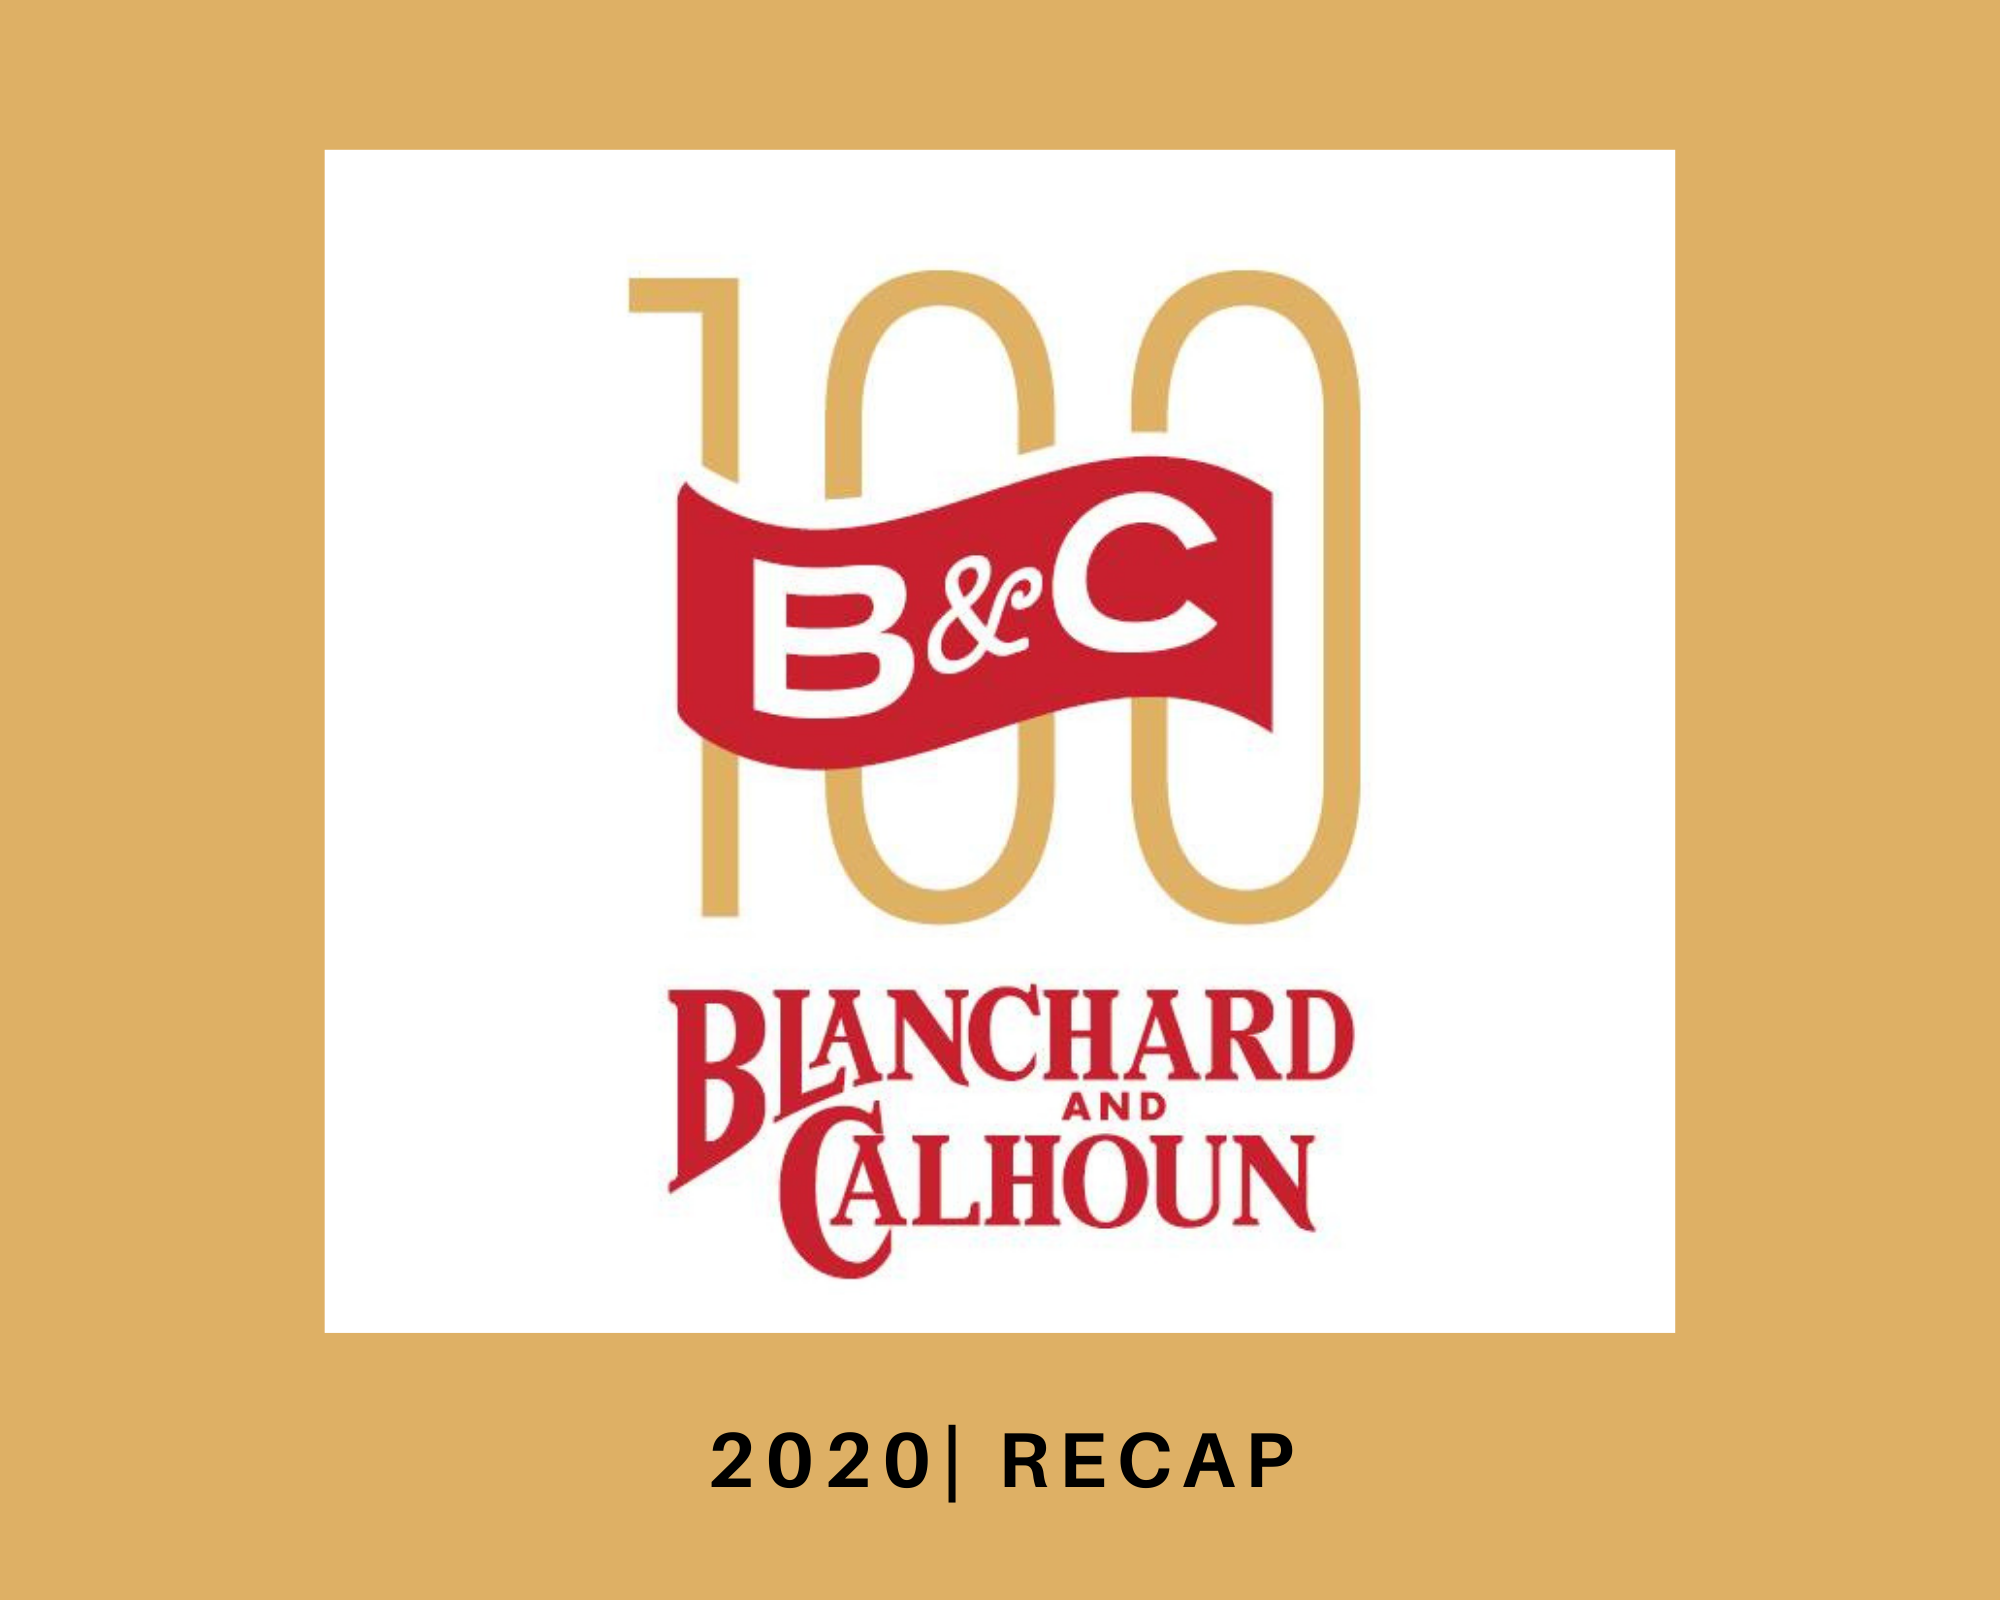 Blanchard & Calhoun Real Estate: 2020 Recap